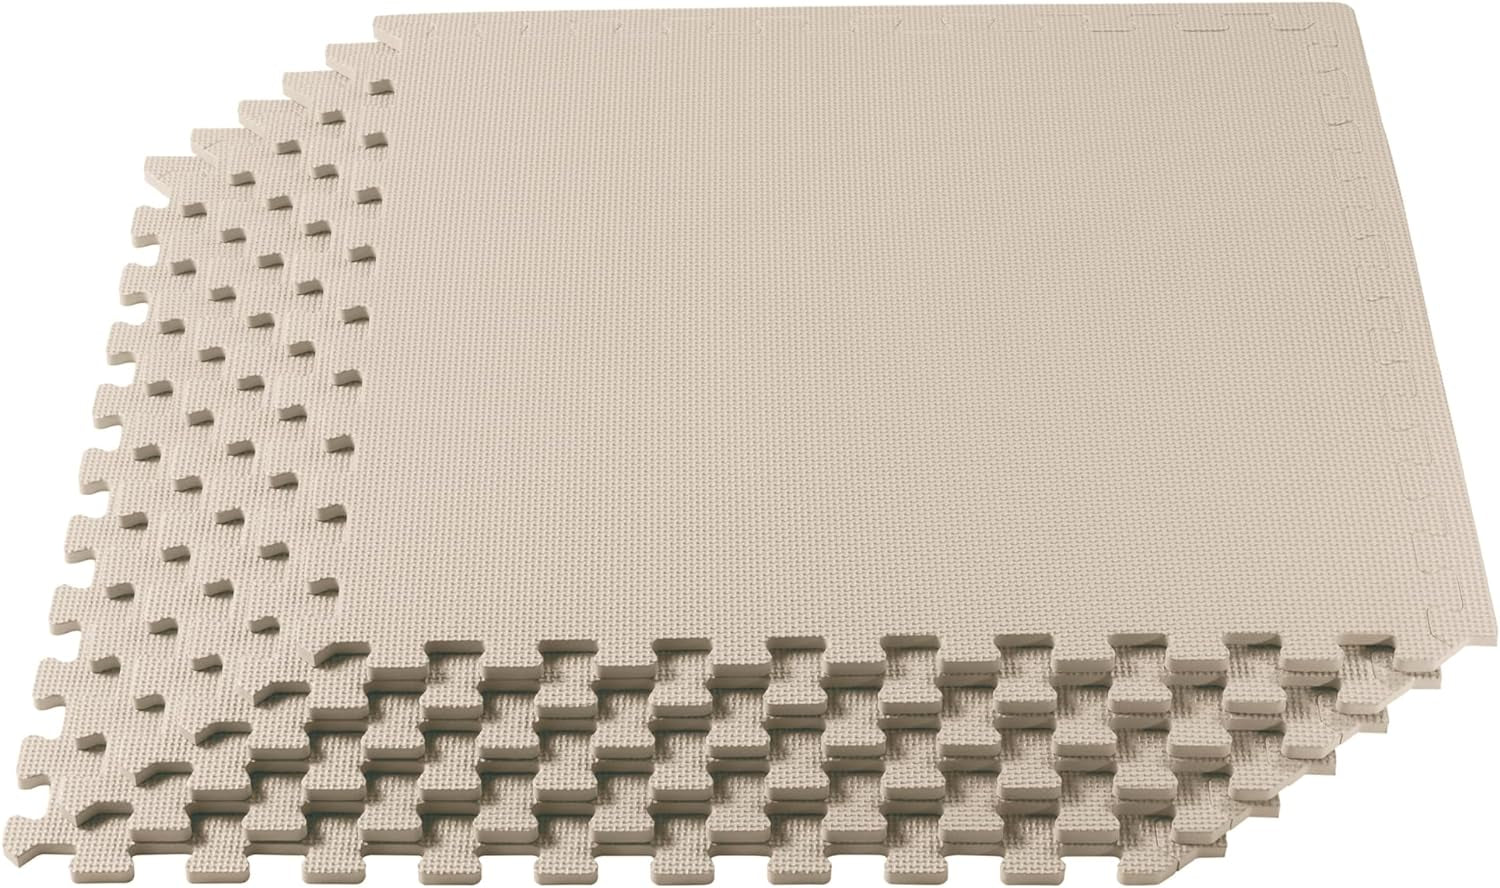 1/2 Inch Thickness Multipurpose EVA Foam Floor Tiles, Interlocking Floor Mat for Indoor Gym and Home Use